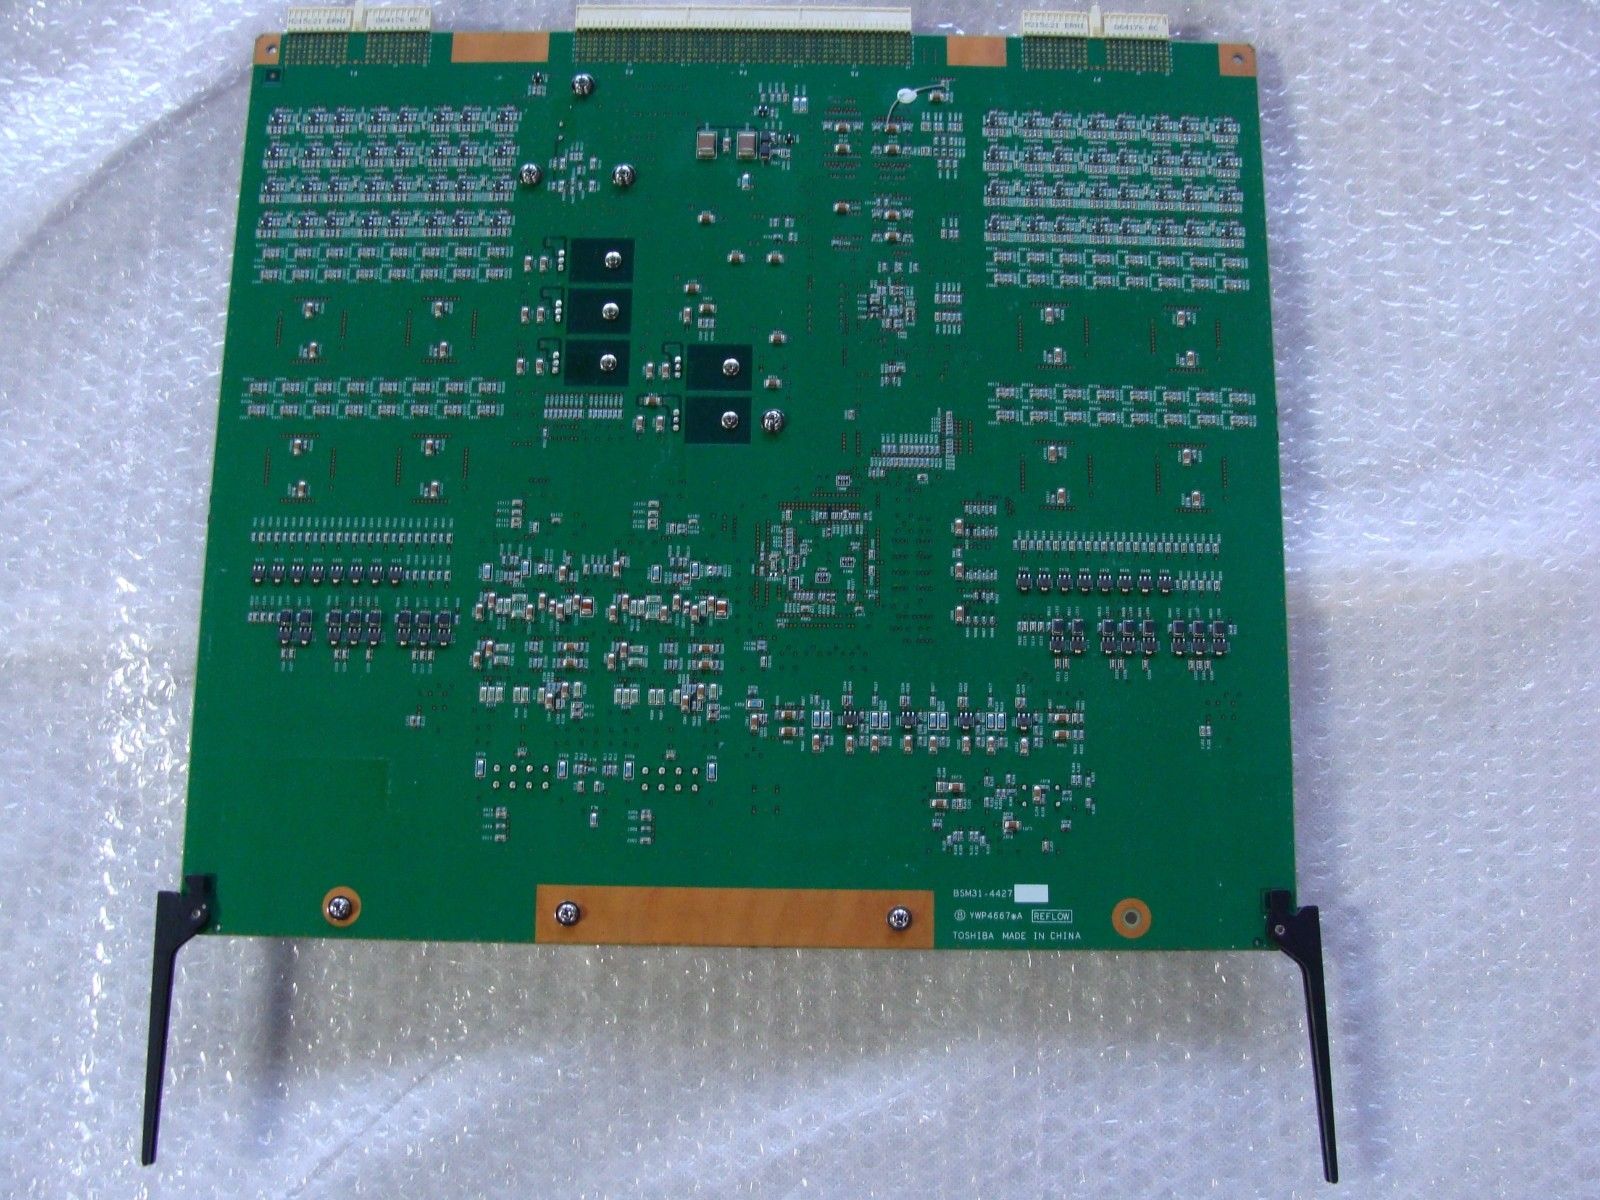 BSM31-4427 YWP4667 CB-ANALOG TOSHIBA APLIO XG SSA-790A ULTRASOUND BOARD DIAGNOSTIC ULTRASOUND MACHINES FOR SALE